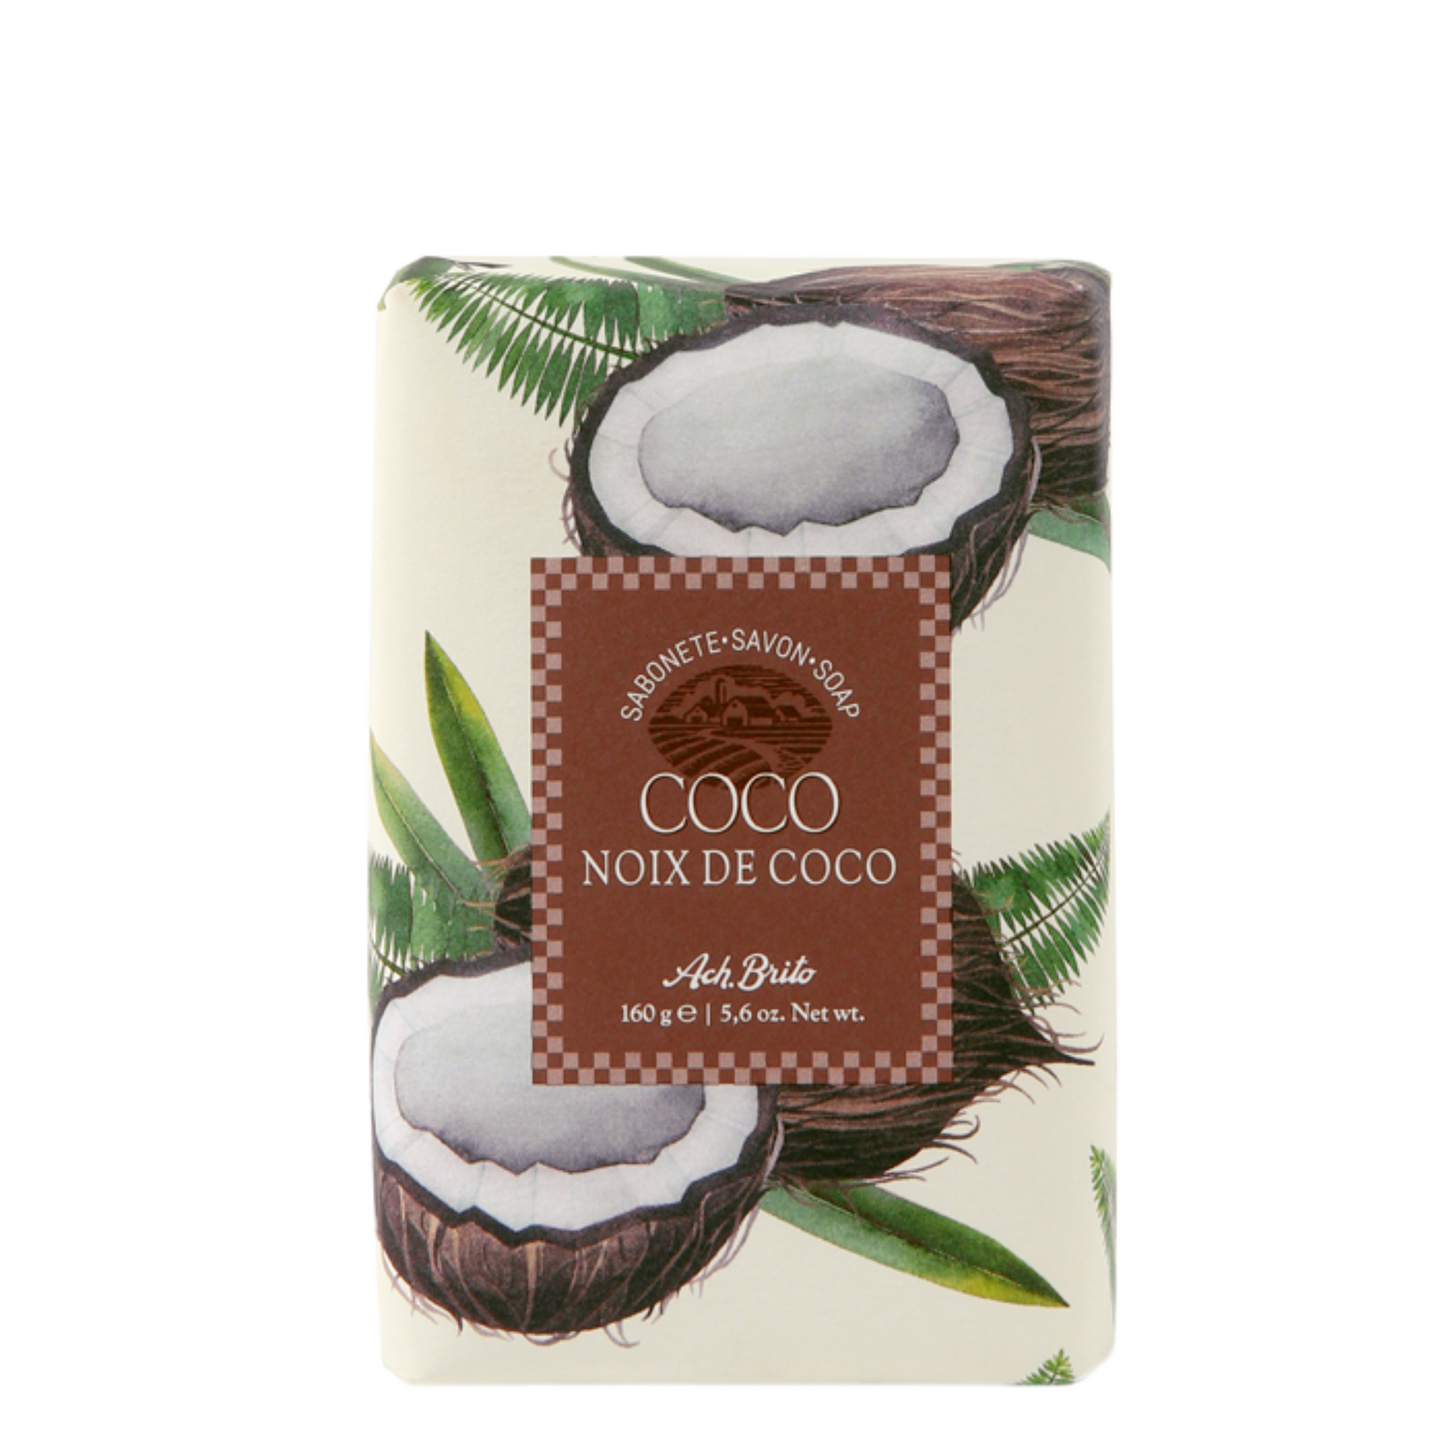 Primary Image of Coconut (Coco) Bar Soap